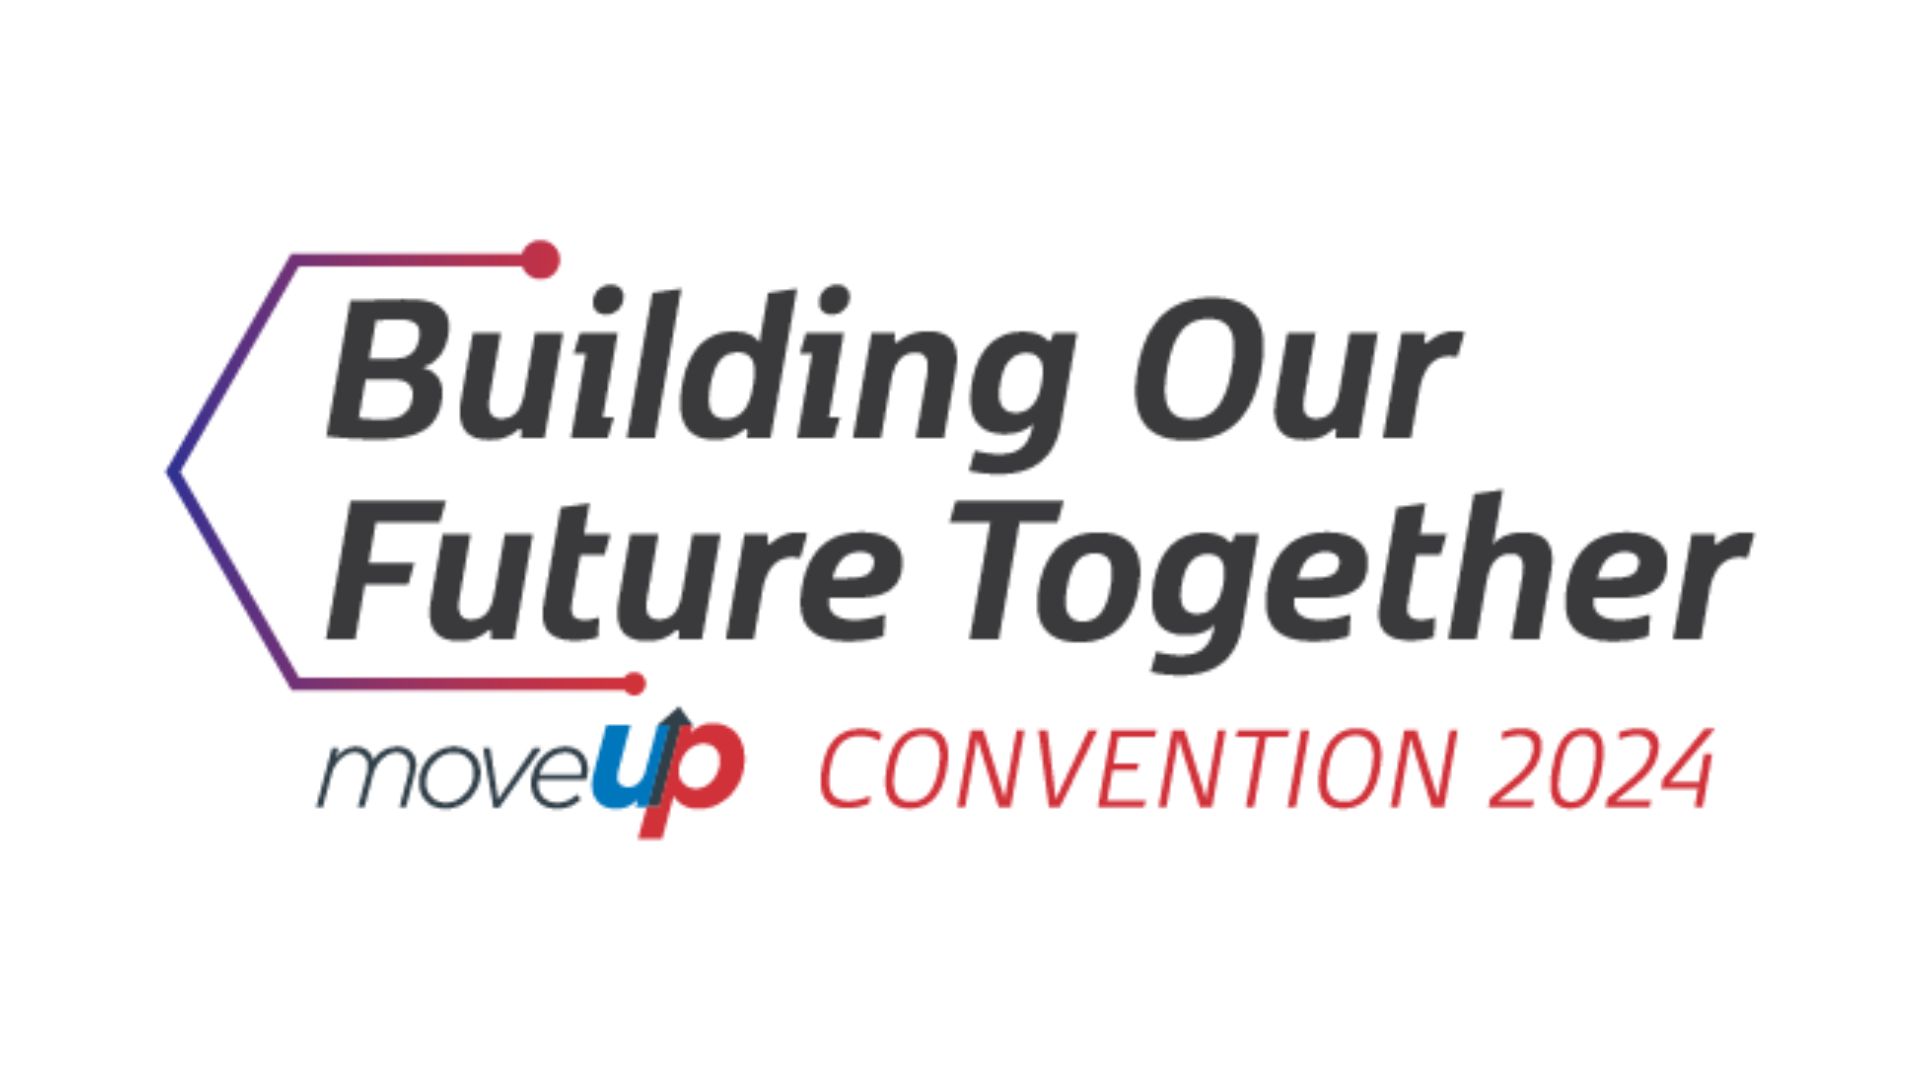 Convention 2024 logo